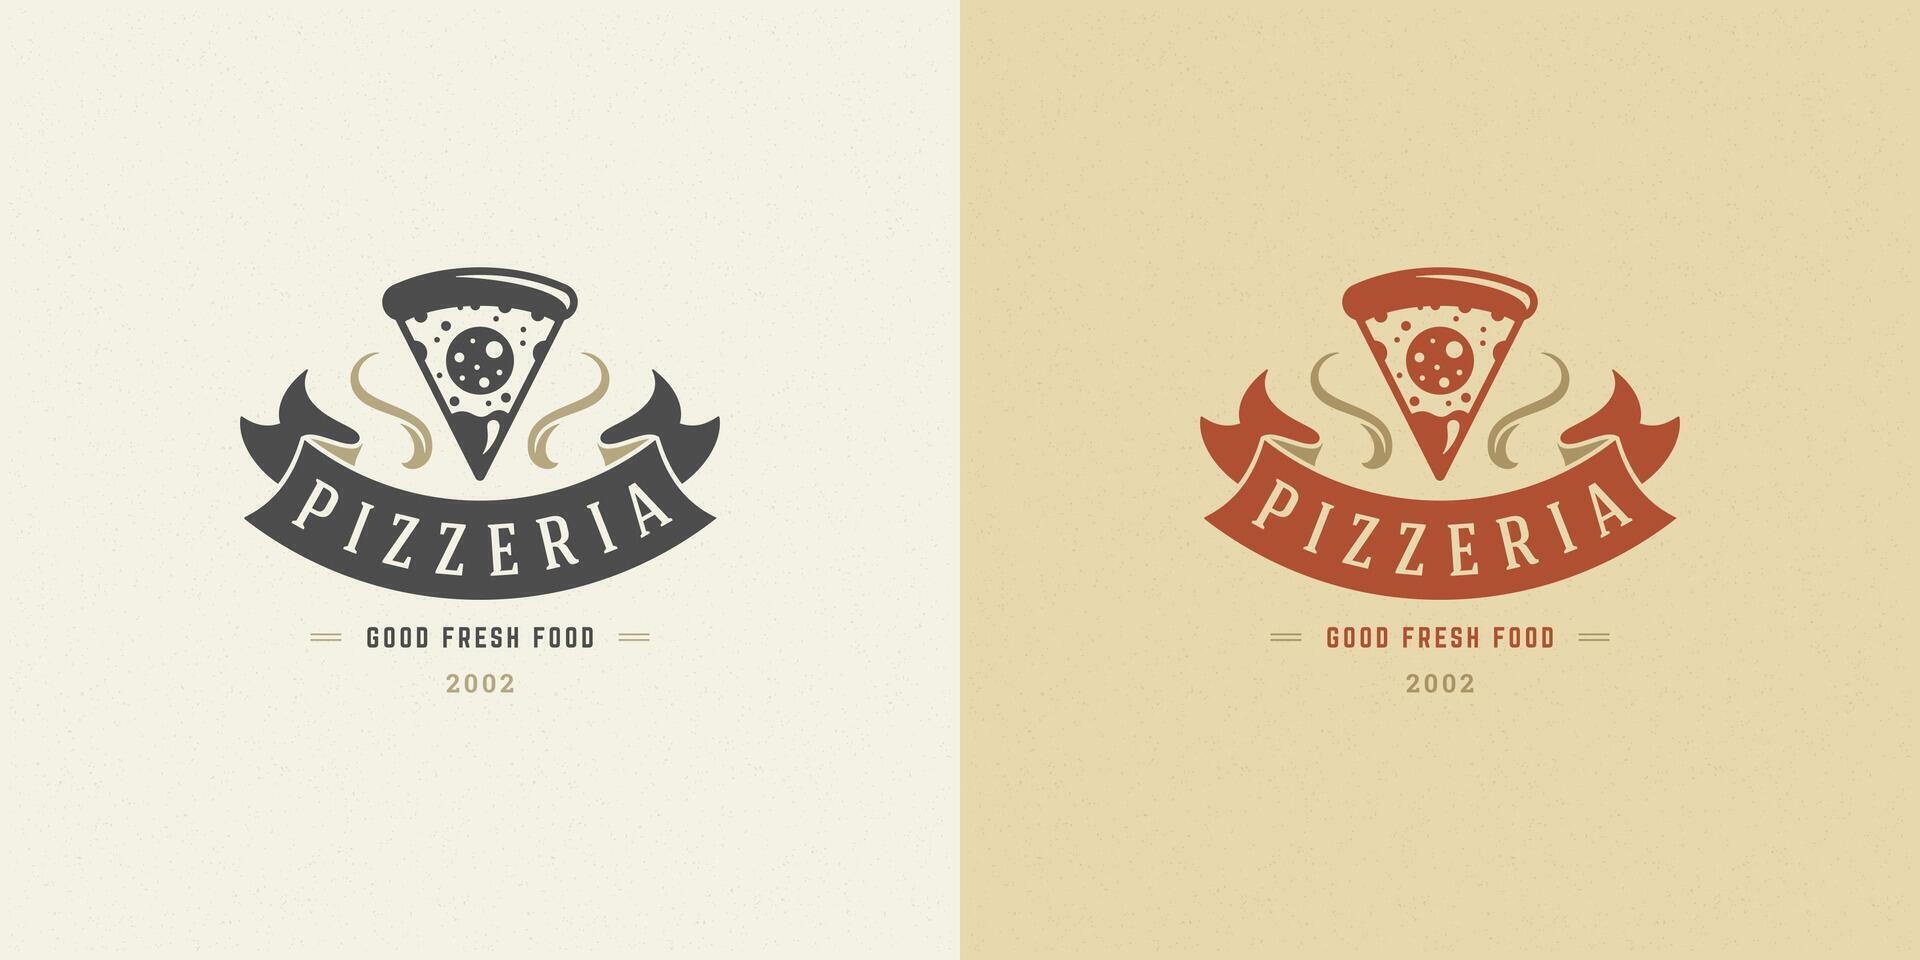 Pizzeria logo illustration pizza slice silhouette good for restaurant menu and cafe badge vector